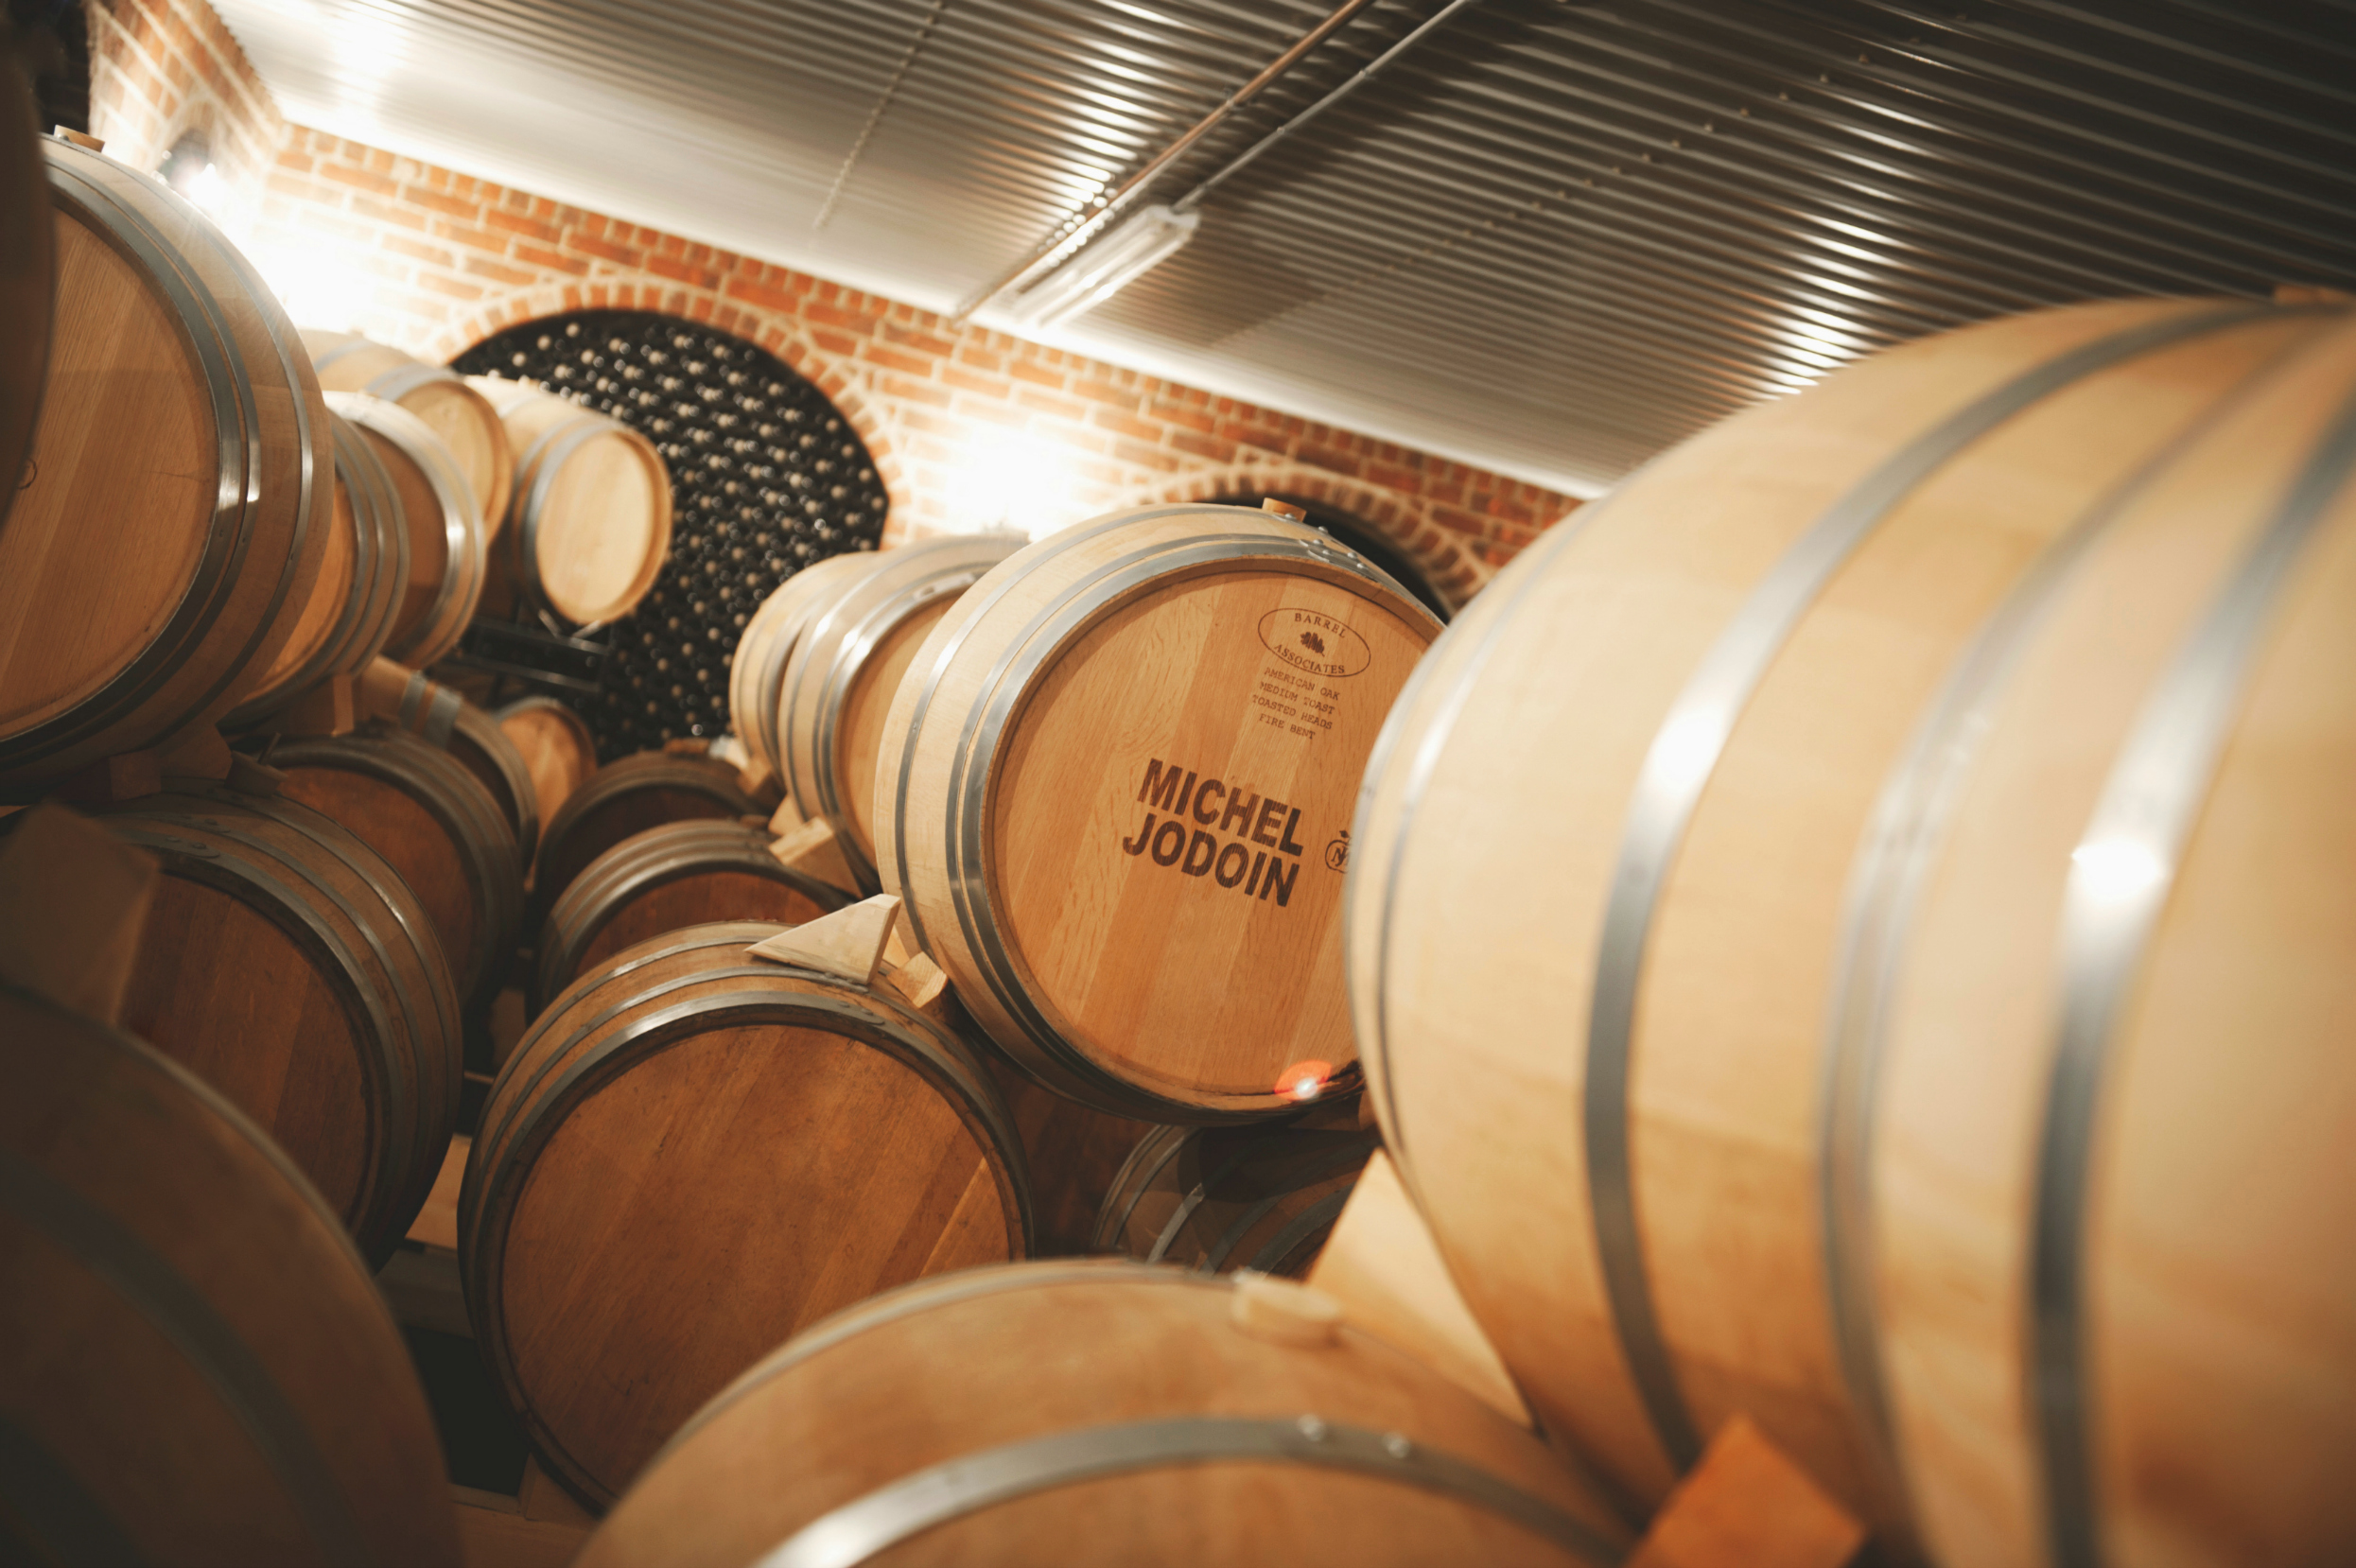 Michel Jodoin's Barrels from the winerie